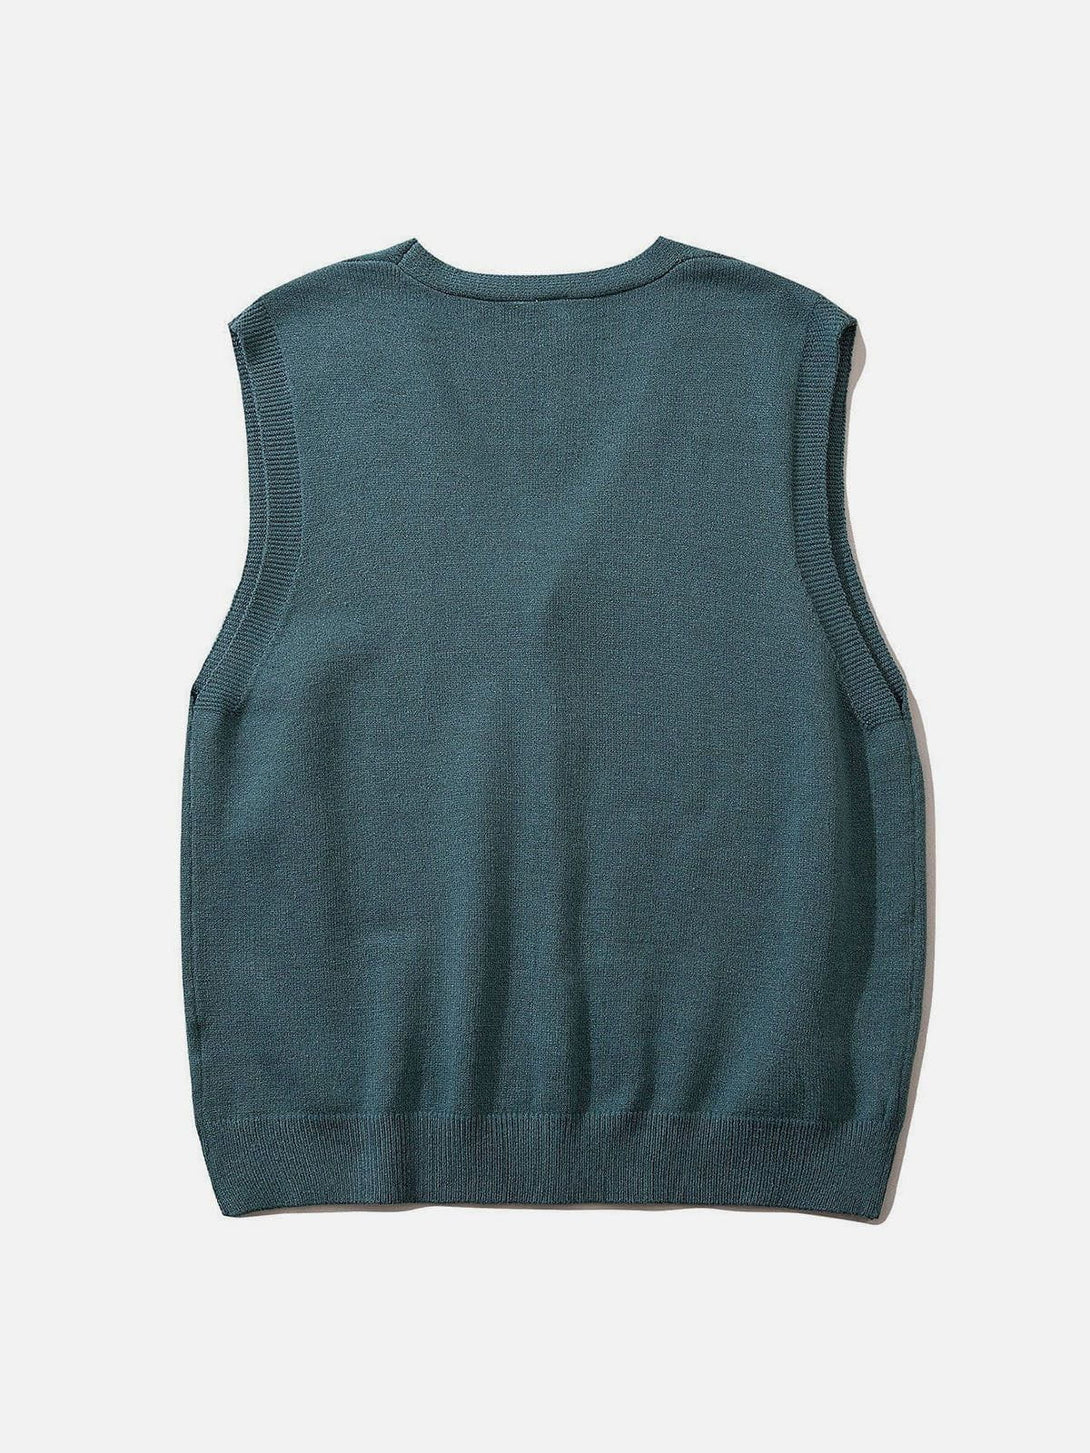 AlanBalen® - Simple Solid Color Sweater Vest AlanBalen